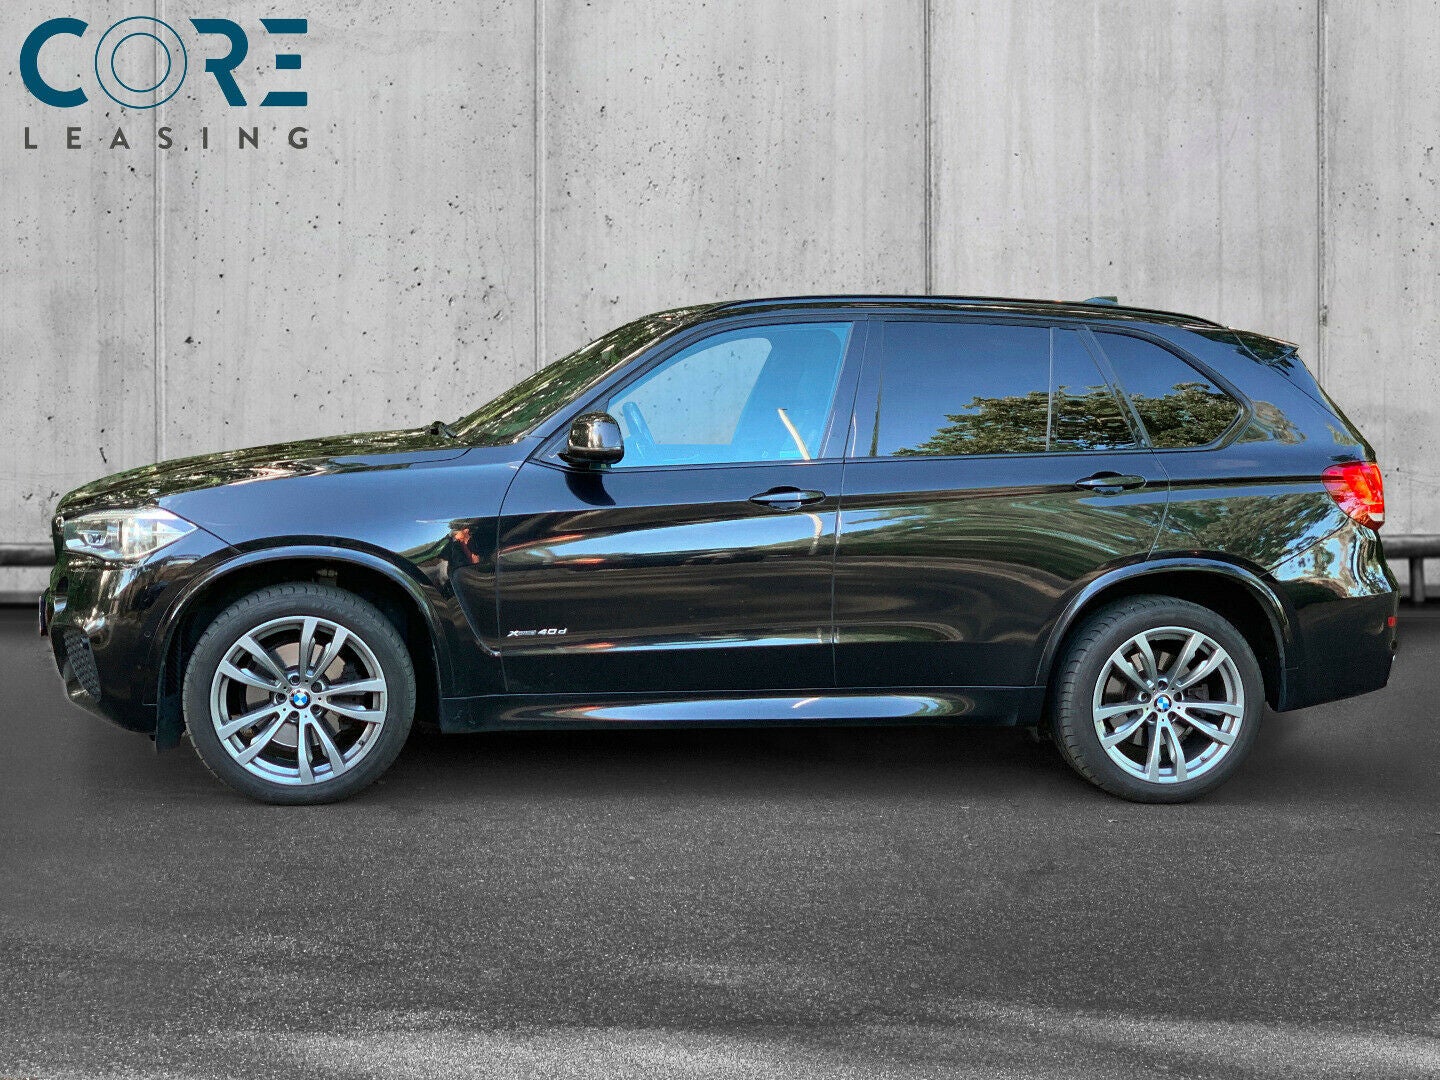 Sortmetal BMW X5 xDrive40d M-Sport aut. 7prs fra 2016 parkeret foran en betonmur. CORE Leasing A/S er eksperter i BMW leasing.